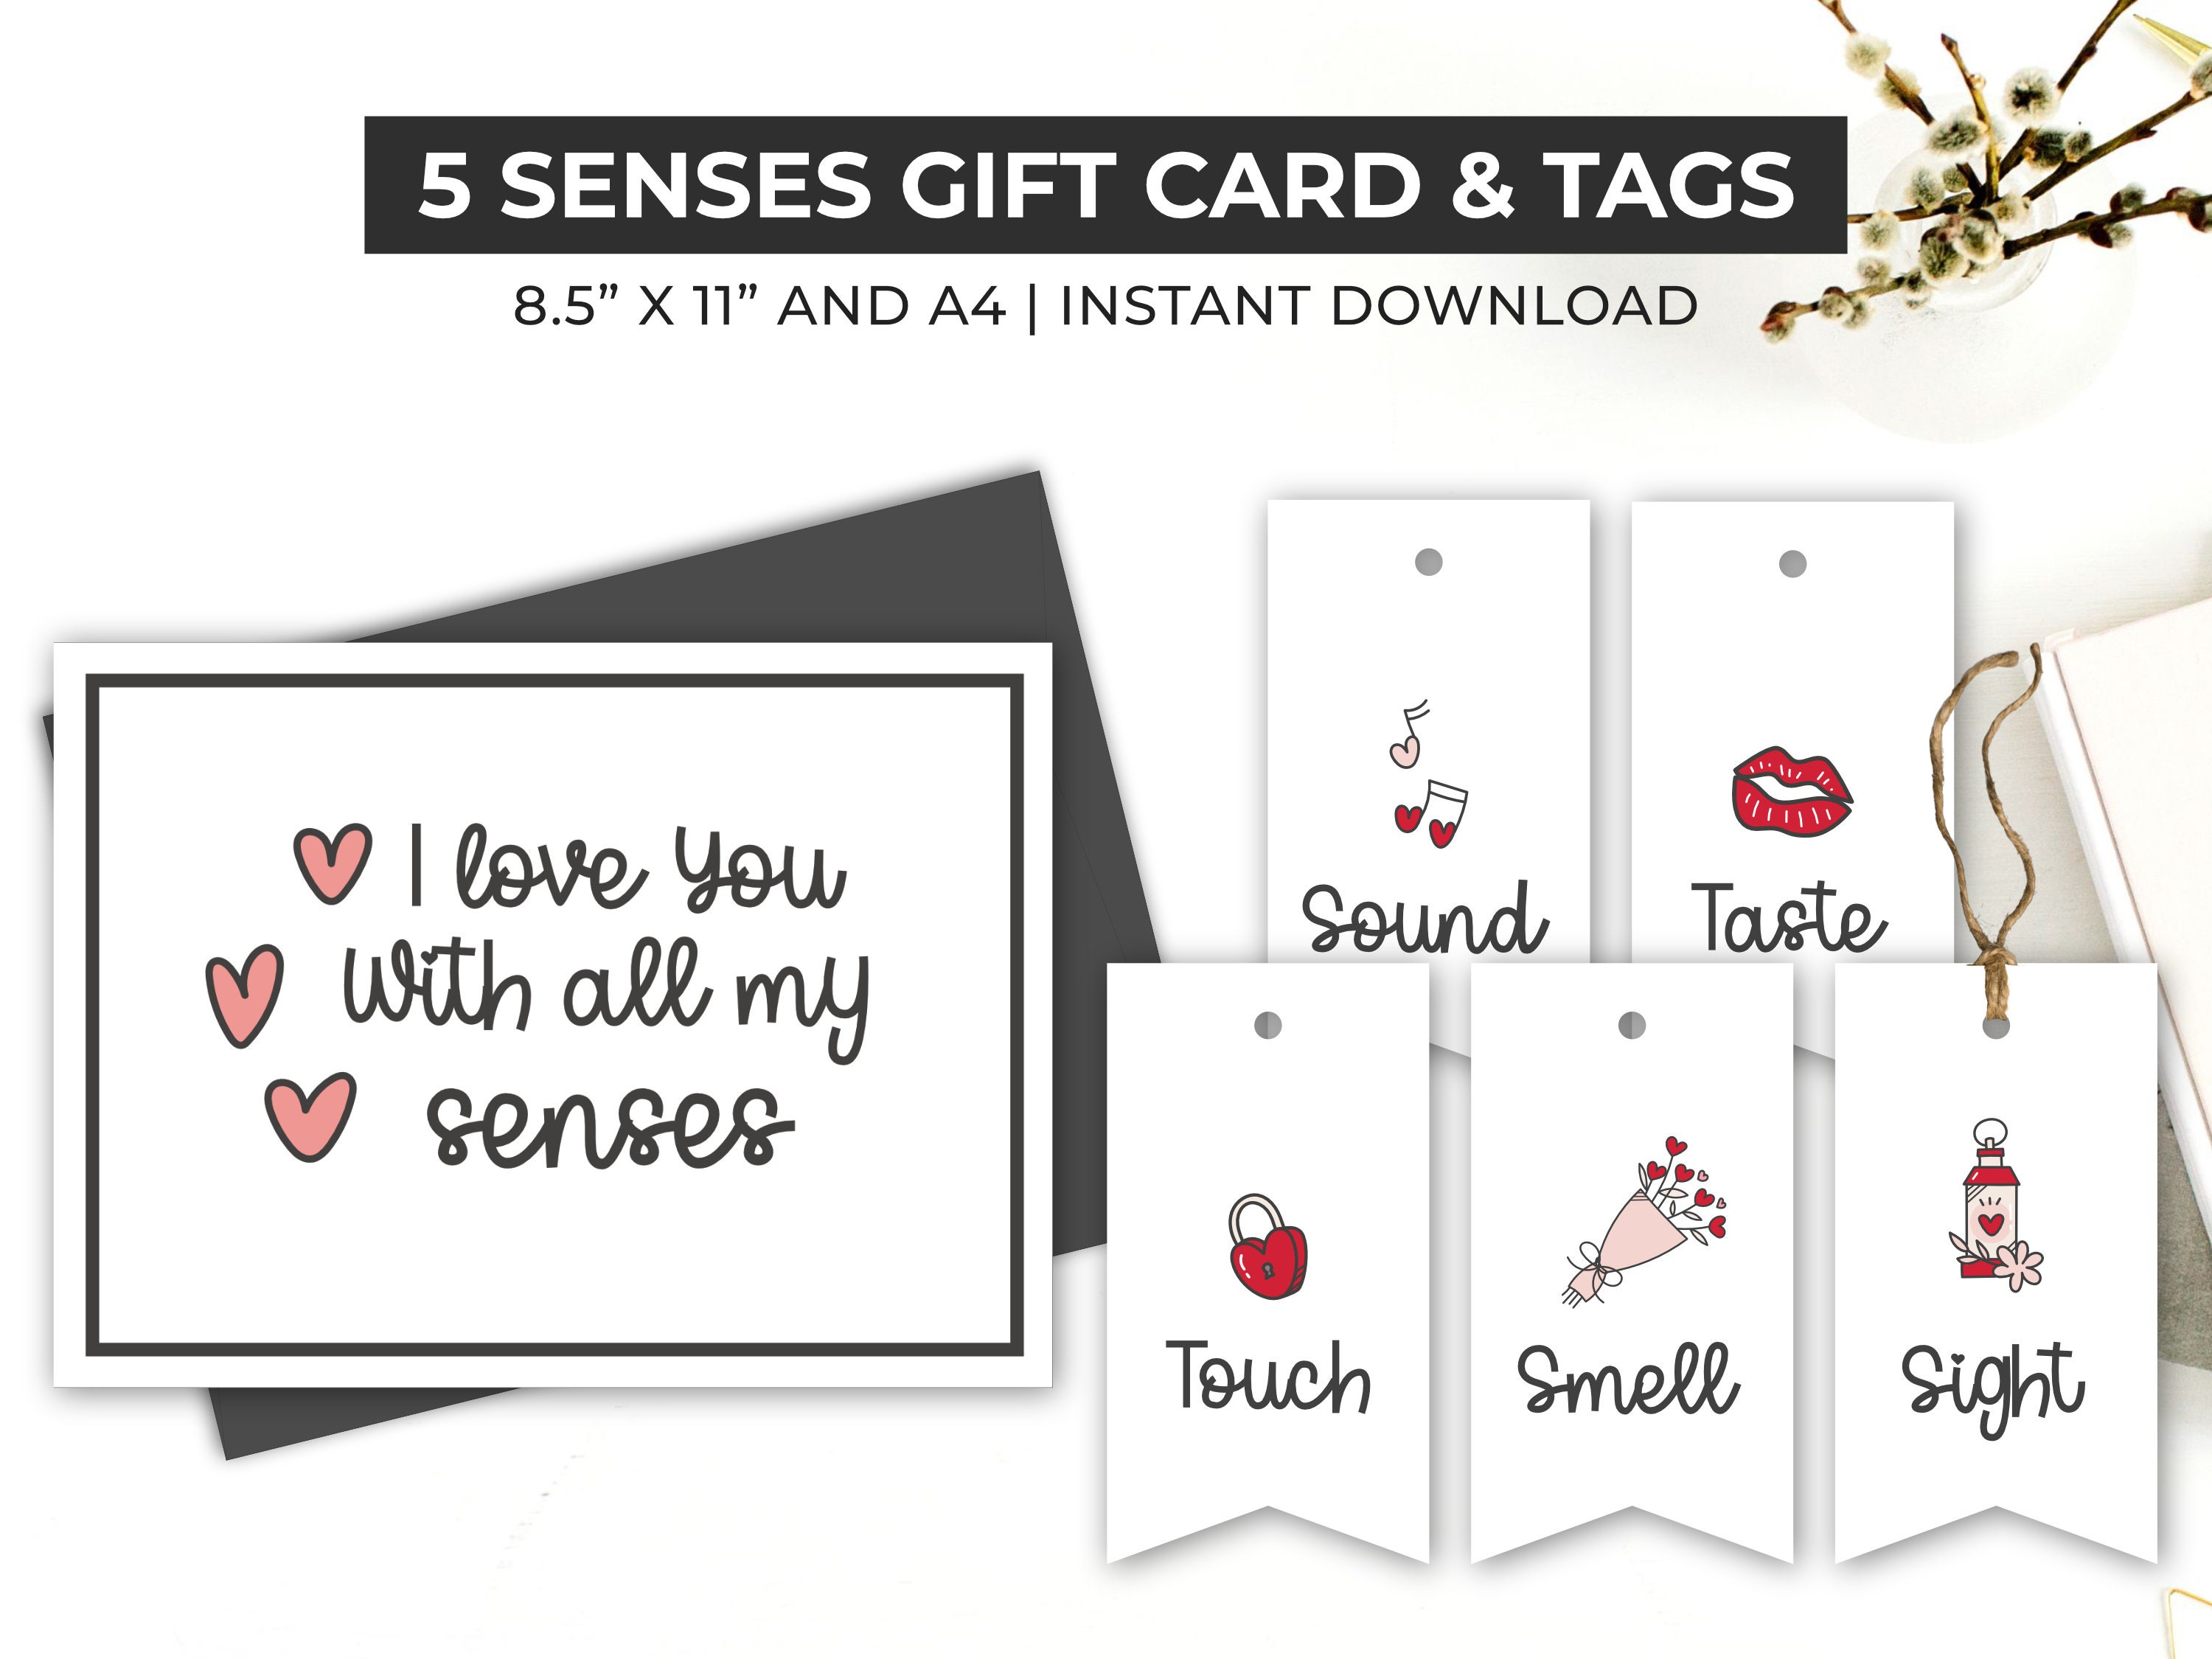 Five Senese Gift Tags & Card. 5 Senses Date Night Idea. Instant